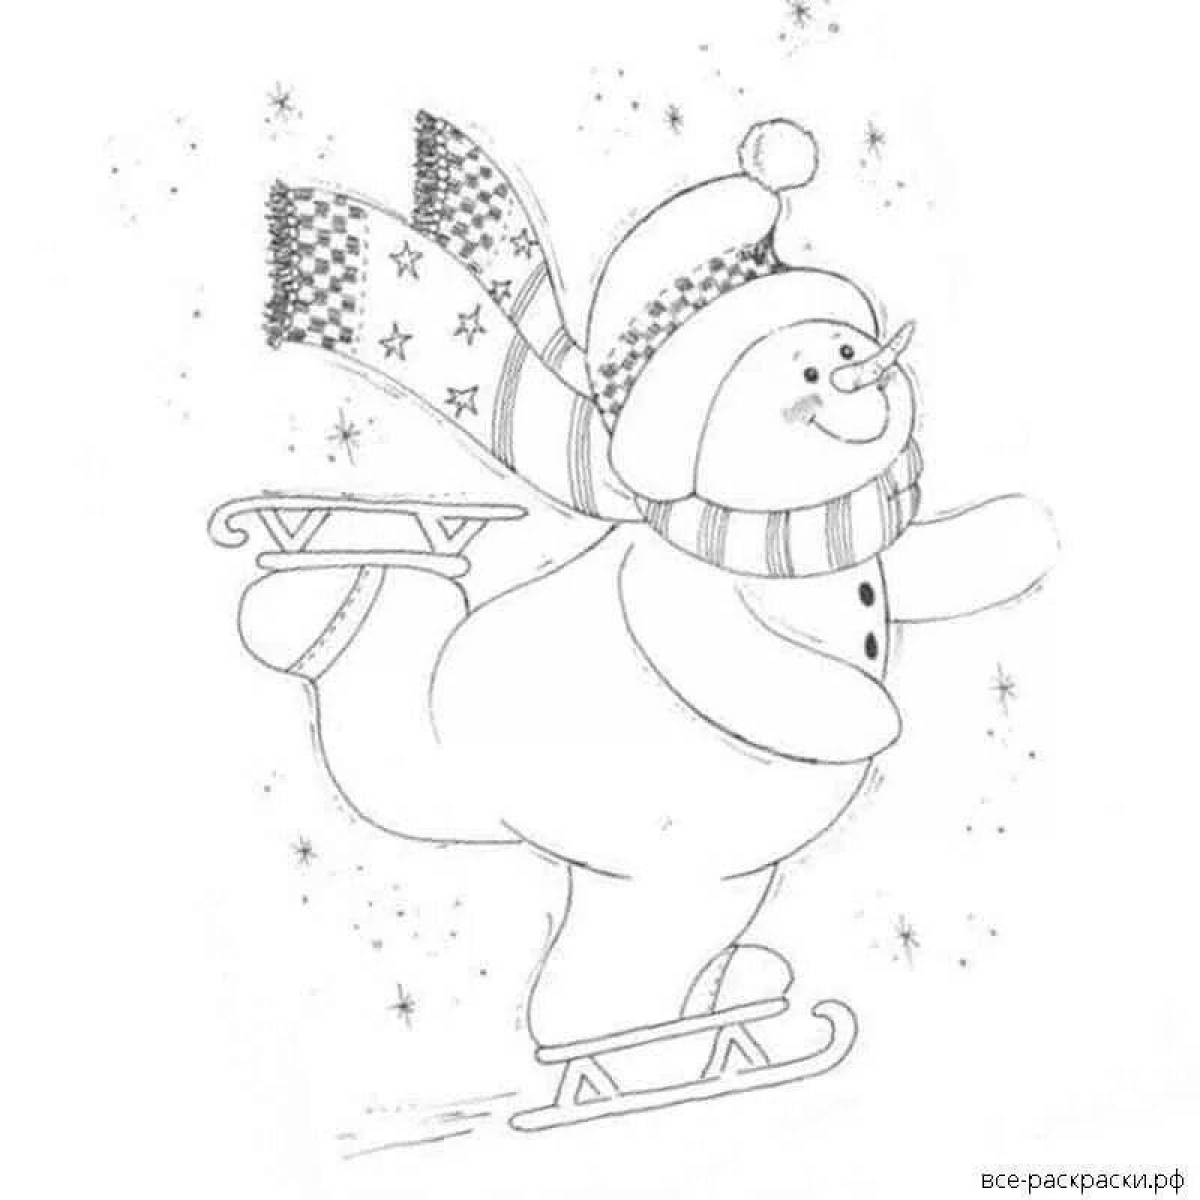 Snowman on skis #8